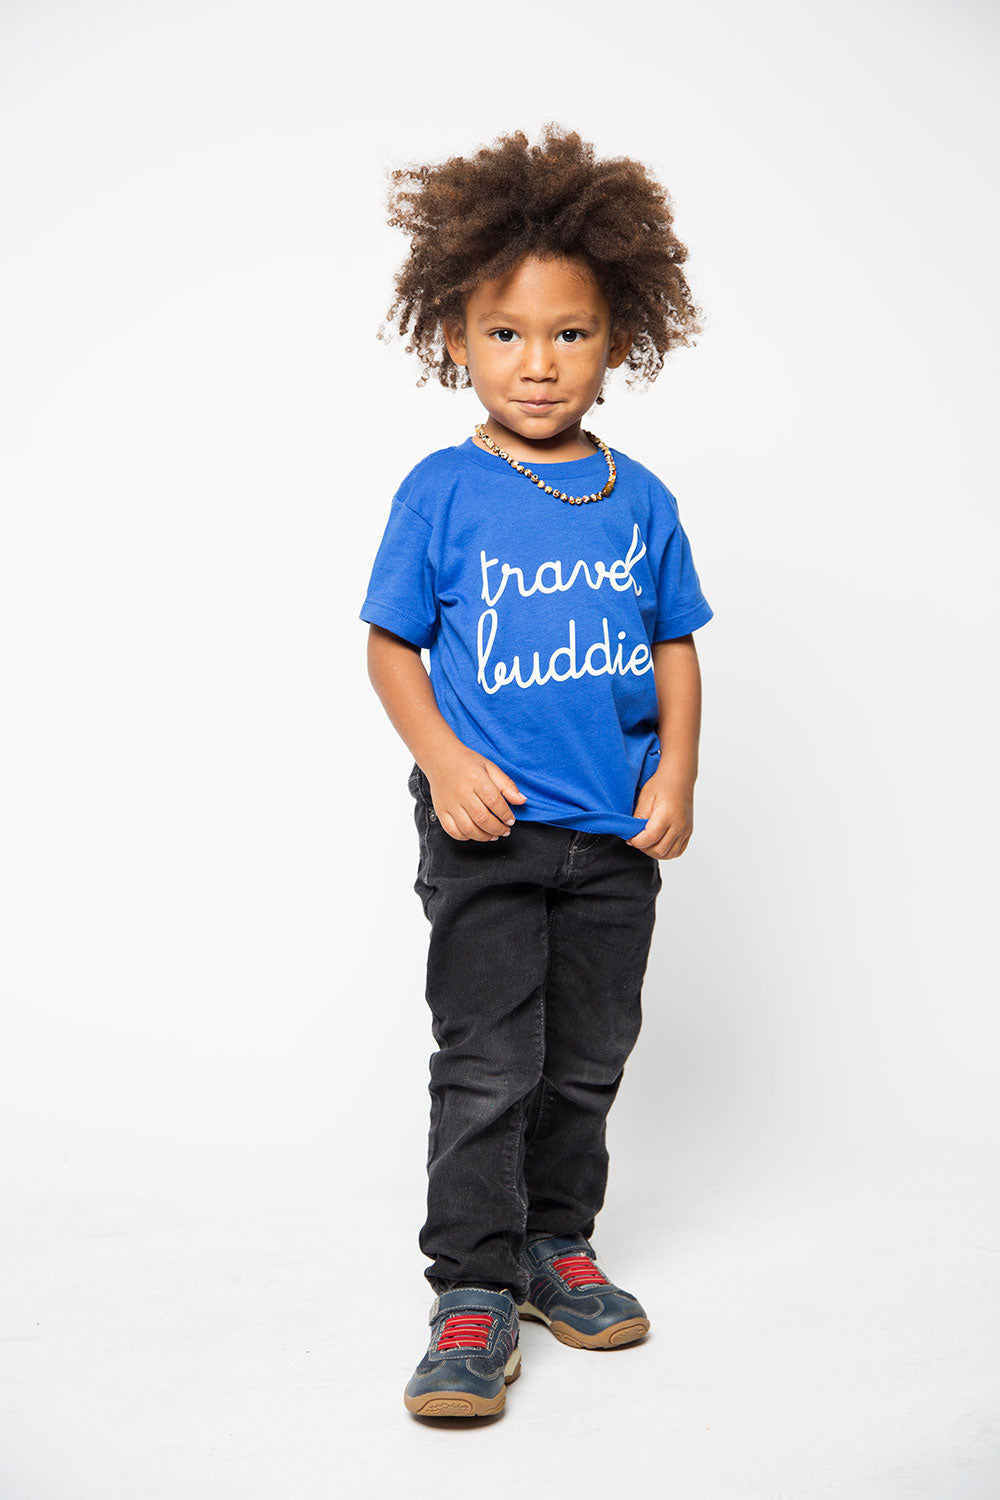 Travel Buddies Kids Shirt in Blue - Trunk Series